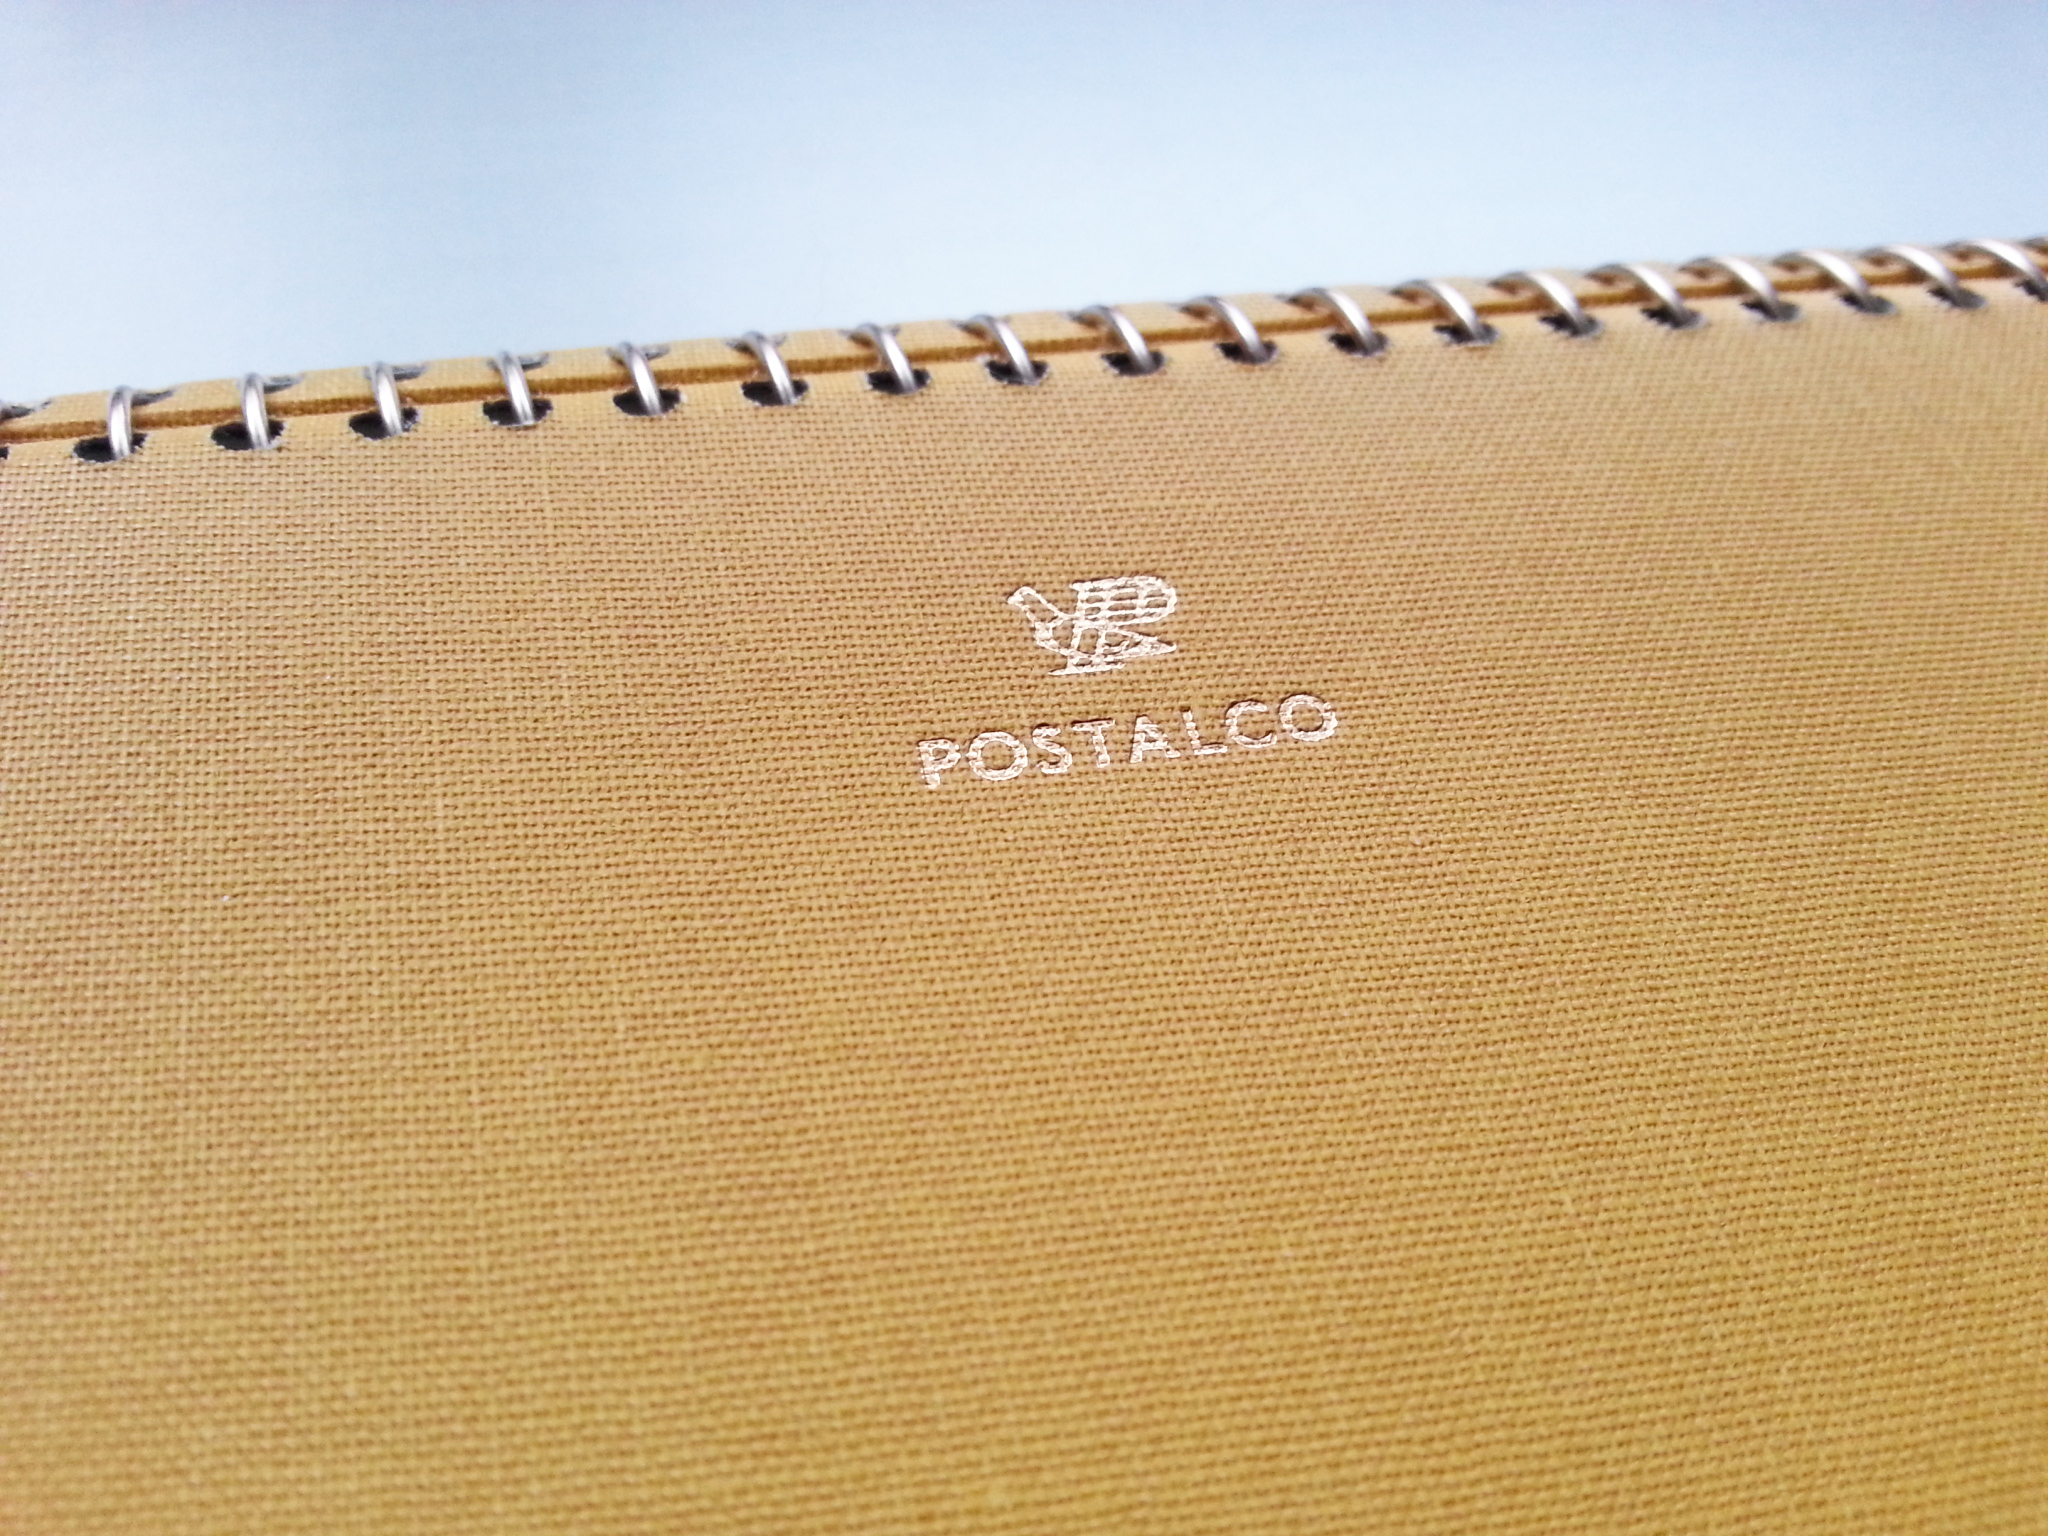 Postalco_logo